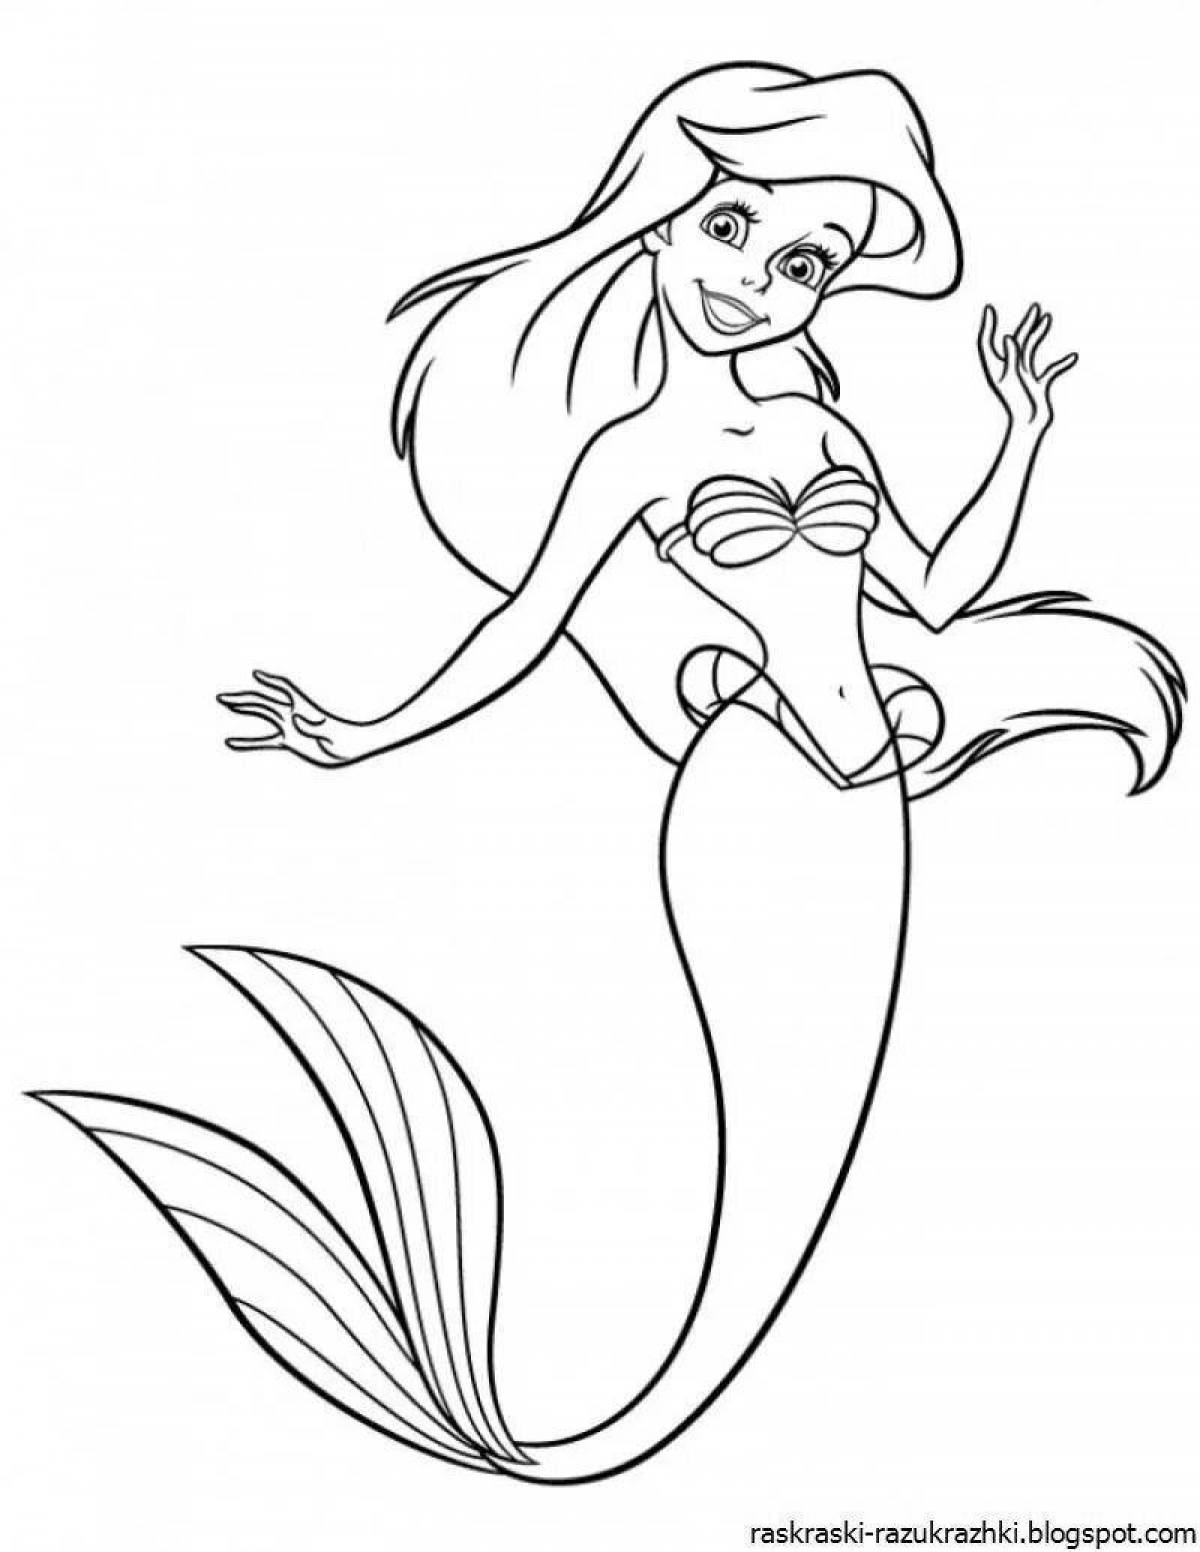 Joyful coloring ariel the little mermaid for girls